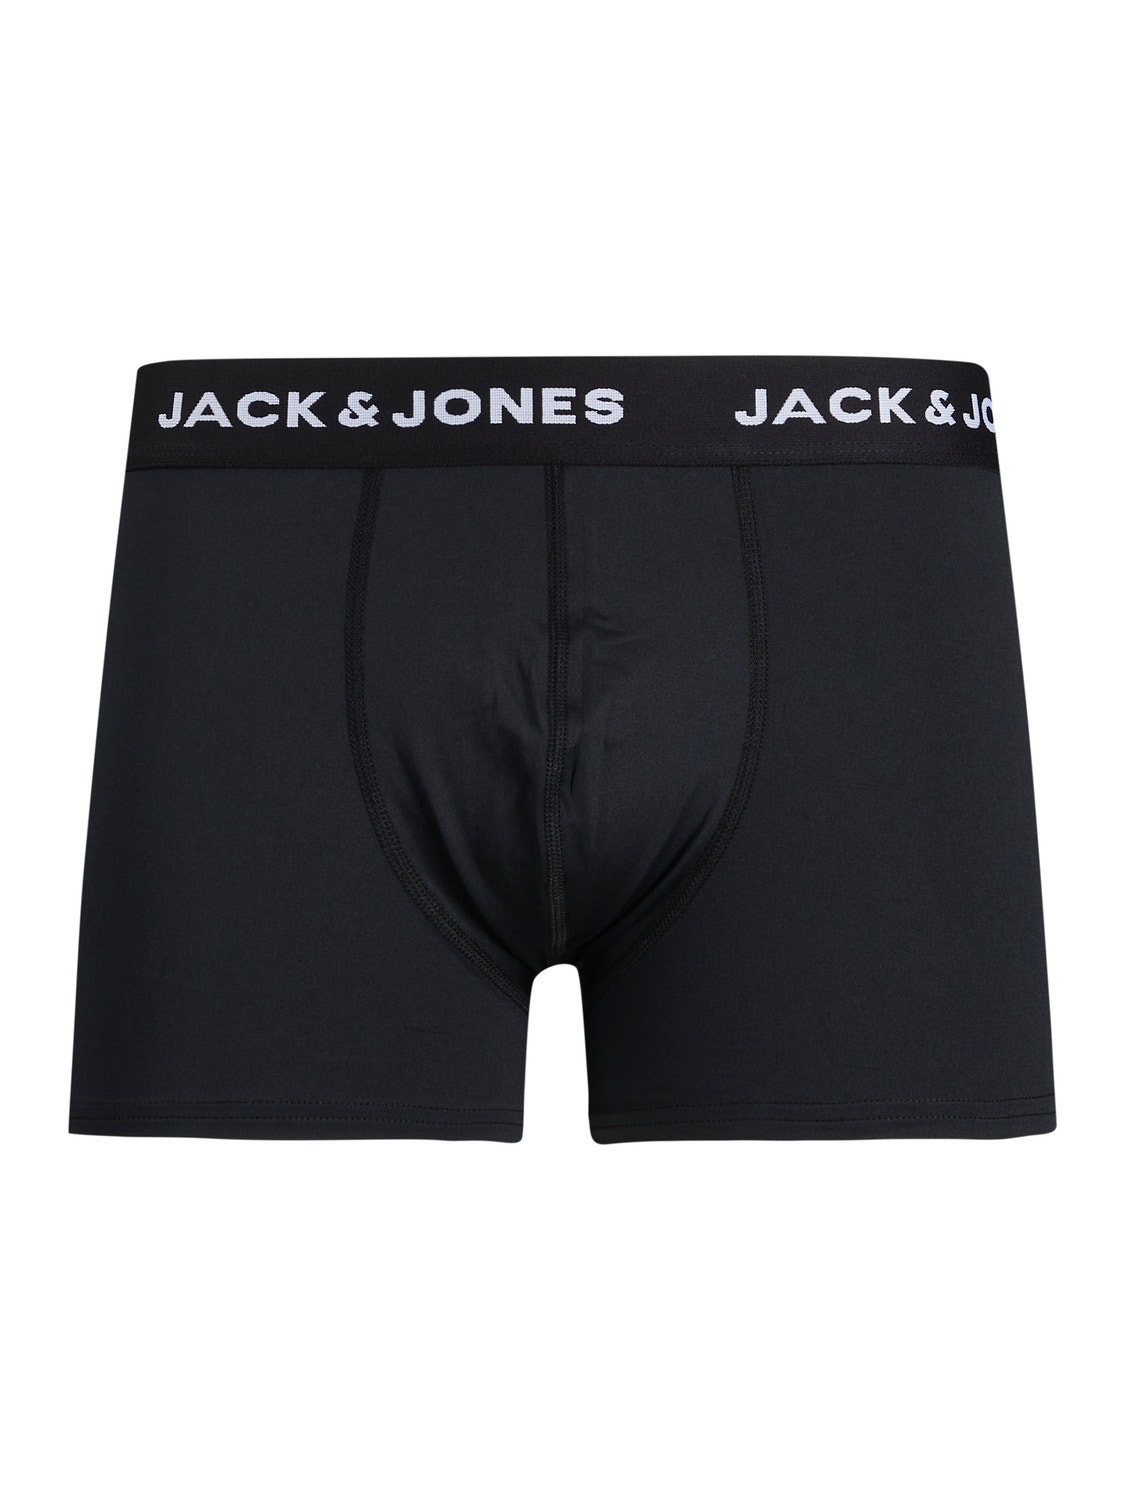 Jack & Jones 3 Trunks -Black - 12204876